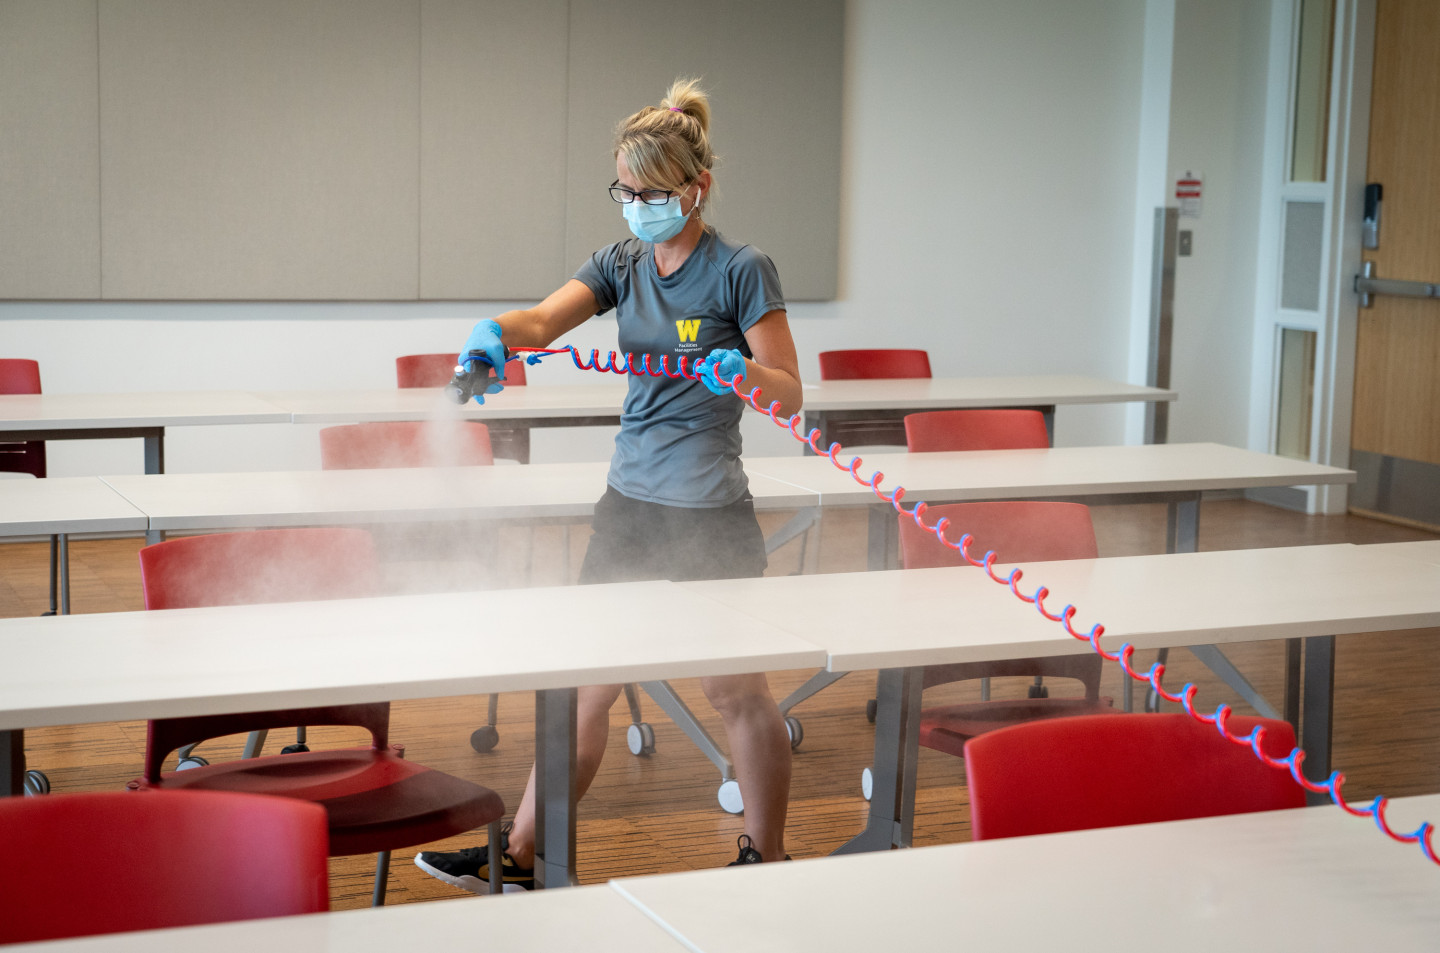 A WMU employee sprays disinfectant using a sprayer in a classroom.